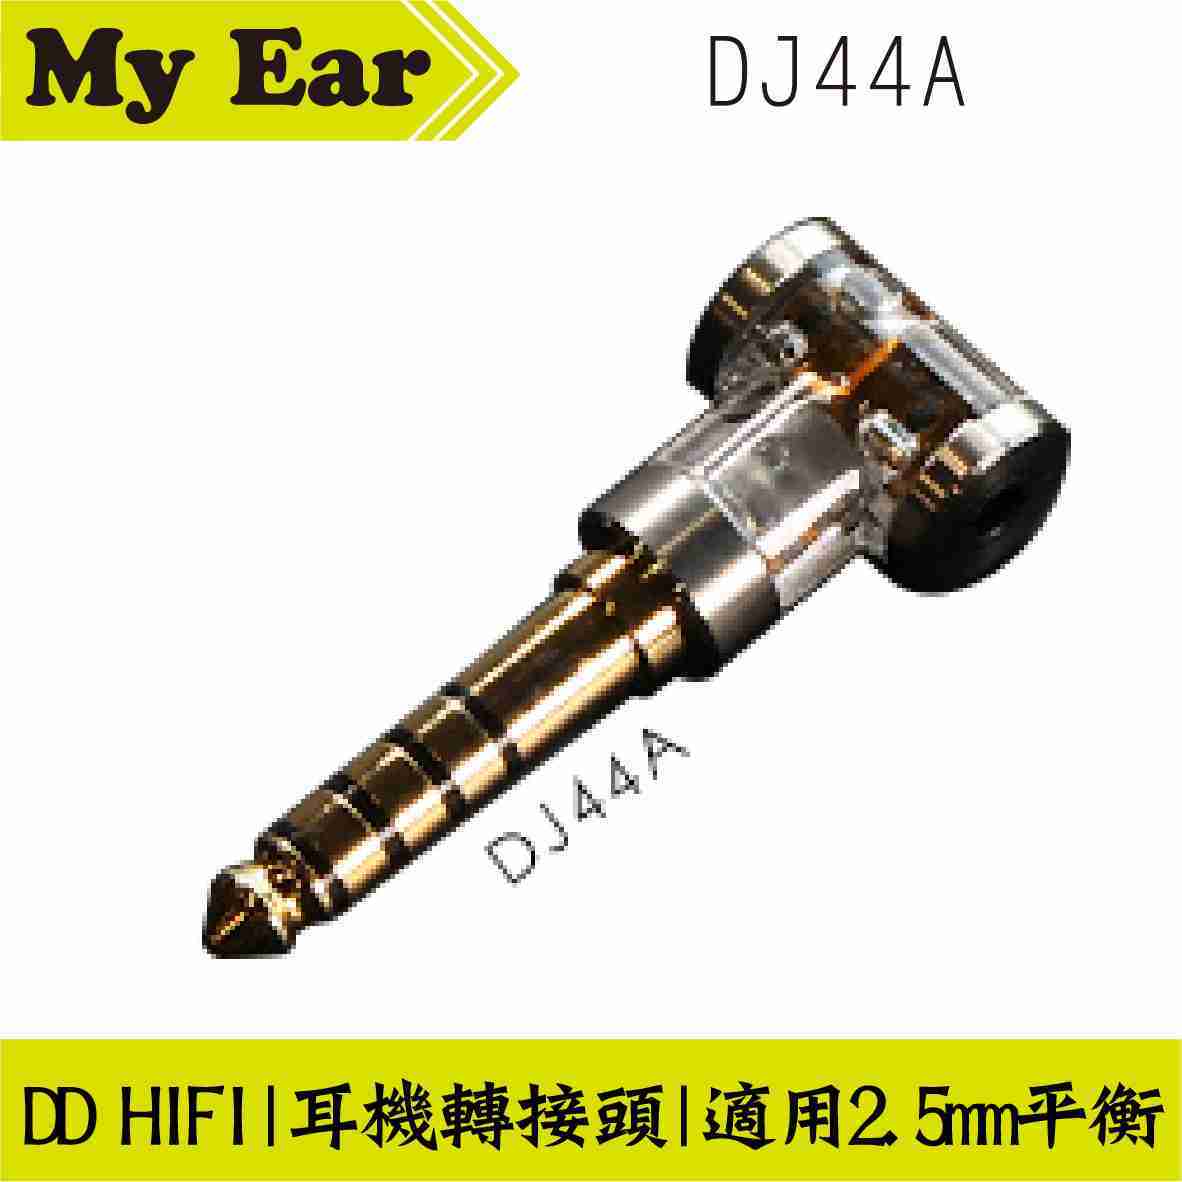 DD Hifi DJ44A 耳機端子 透明外殼 轉接頭 適用2.5mm平衡接頭 | My Ear耳機專門店